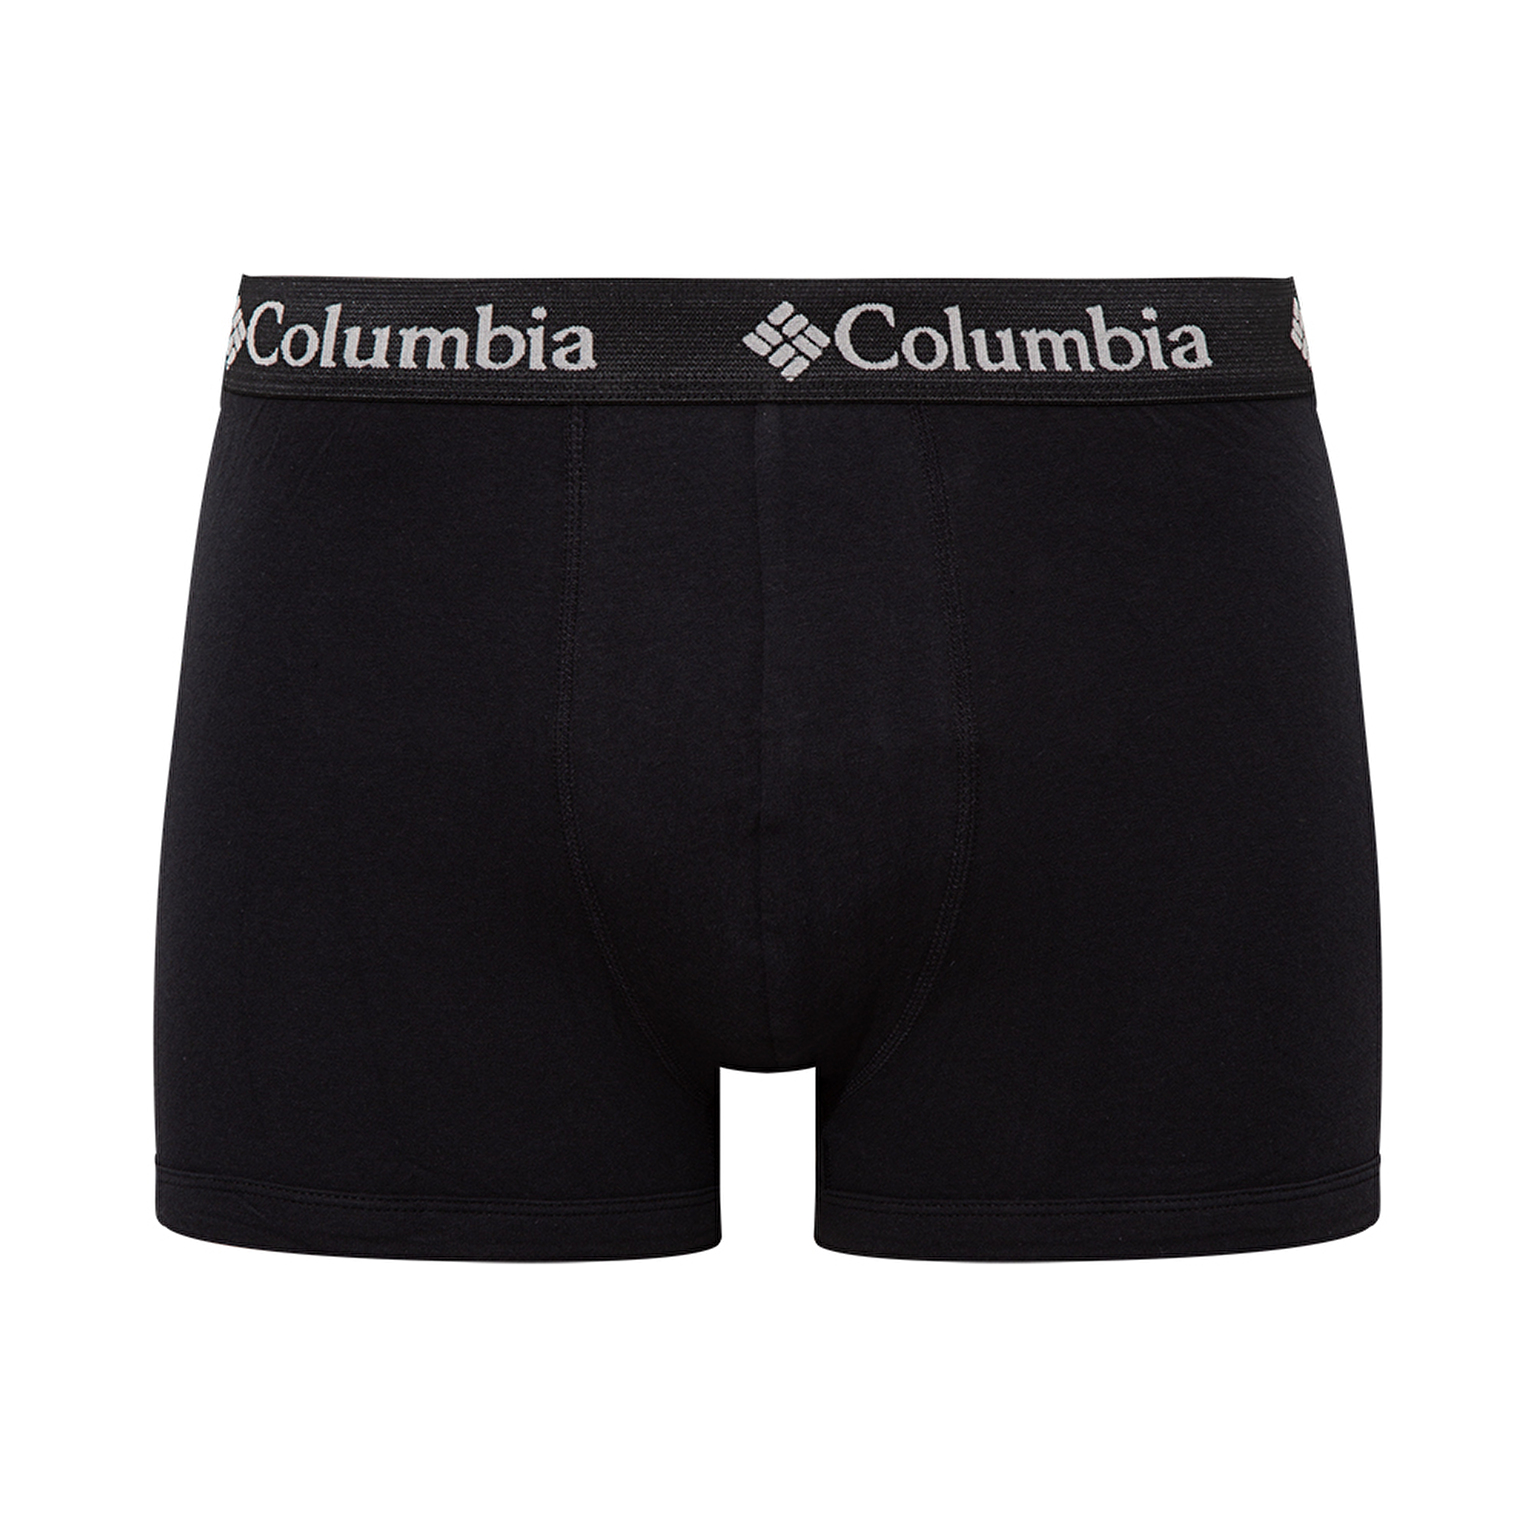 Columbia Boxer Trunk